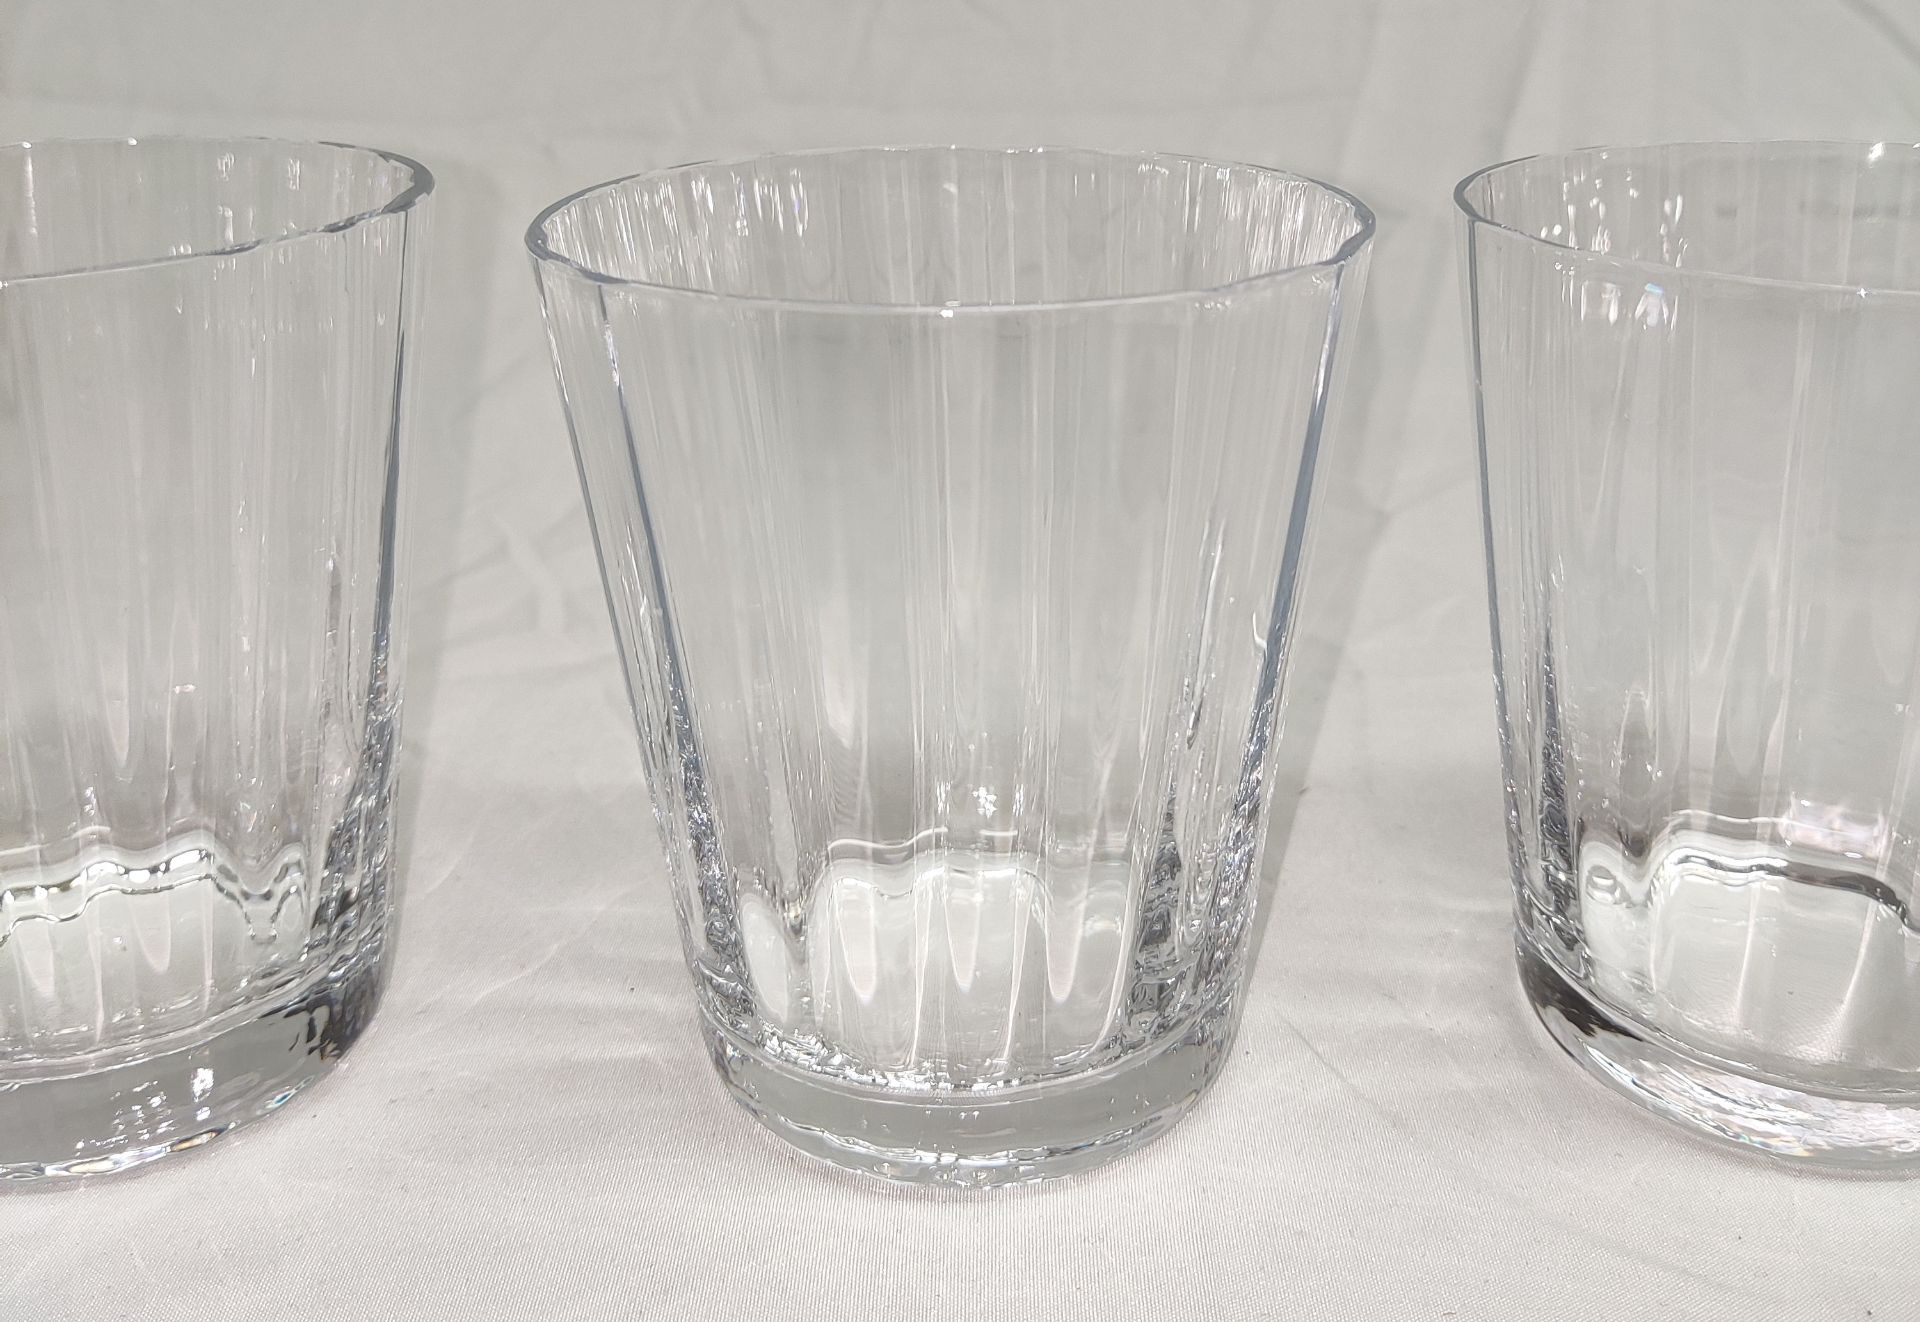 3 x SOHO HOME Pembroke Low Ball Glasses - New/Boxed - Original RRP £70 - Ref: 6909149/HJL368/C19/ - Image 10 of 11